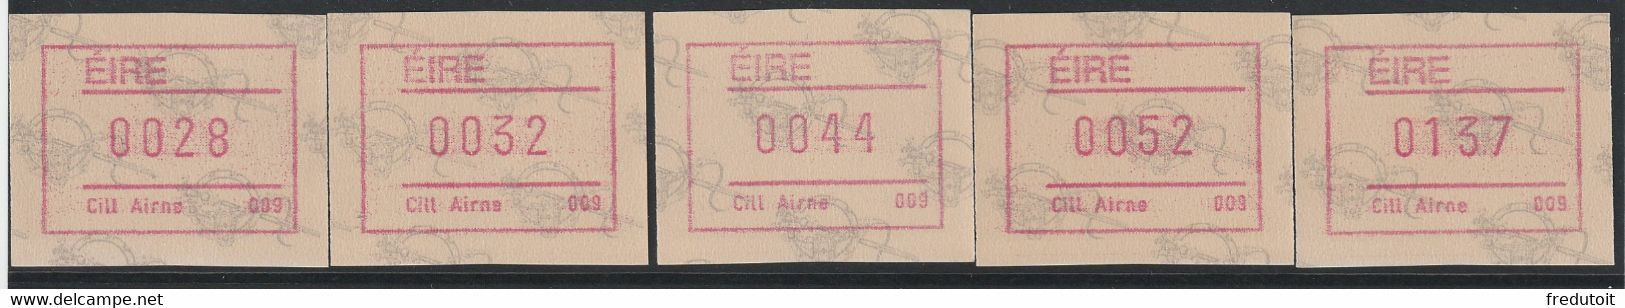 IRLANDE - Timbres Distributeurs / FRAMA  ATM - N°4** (1992) Cill Airne 009 - Automatenmarken (Frama)